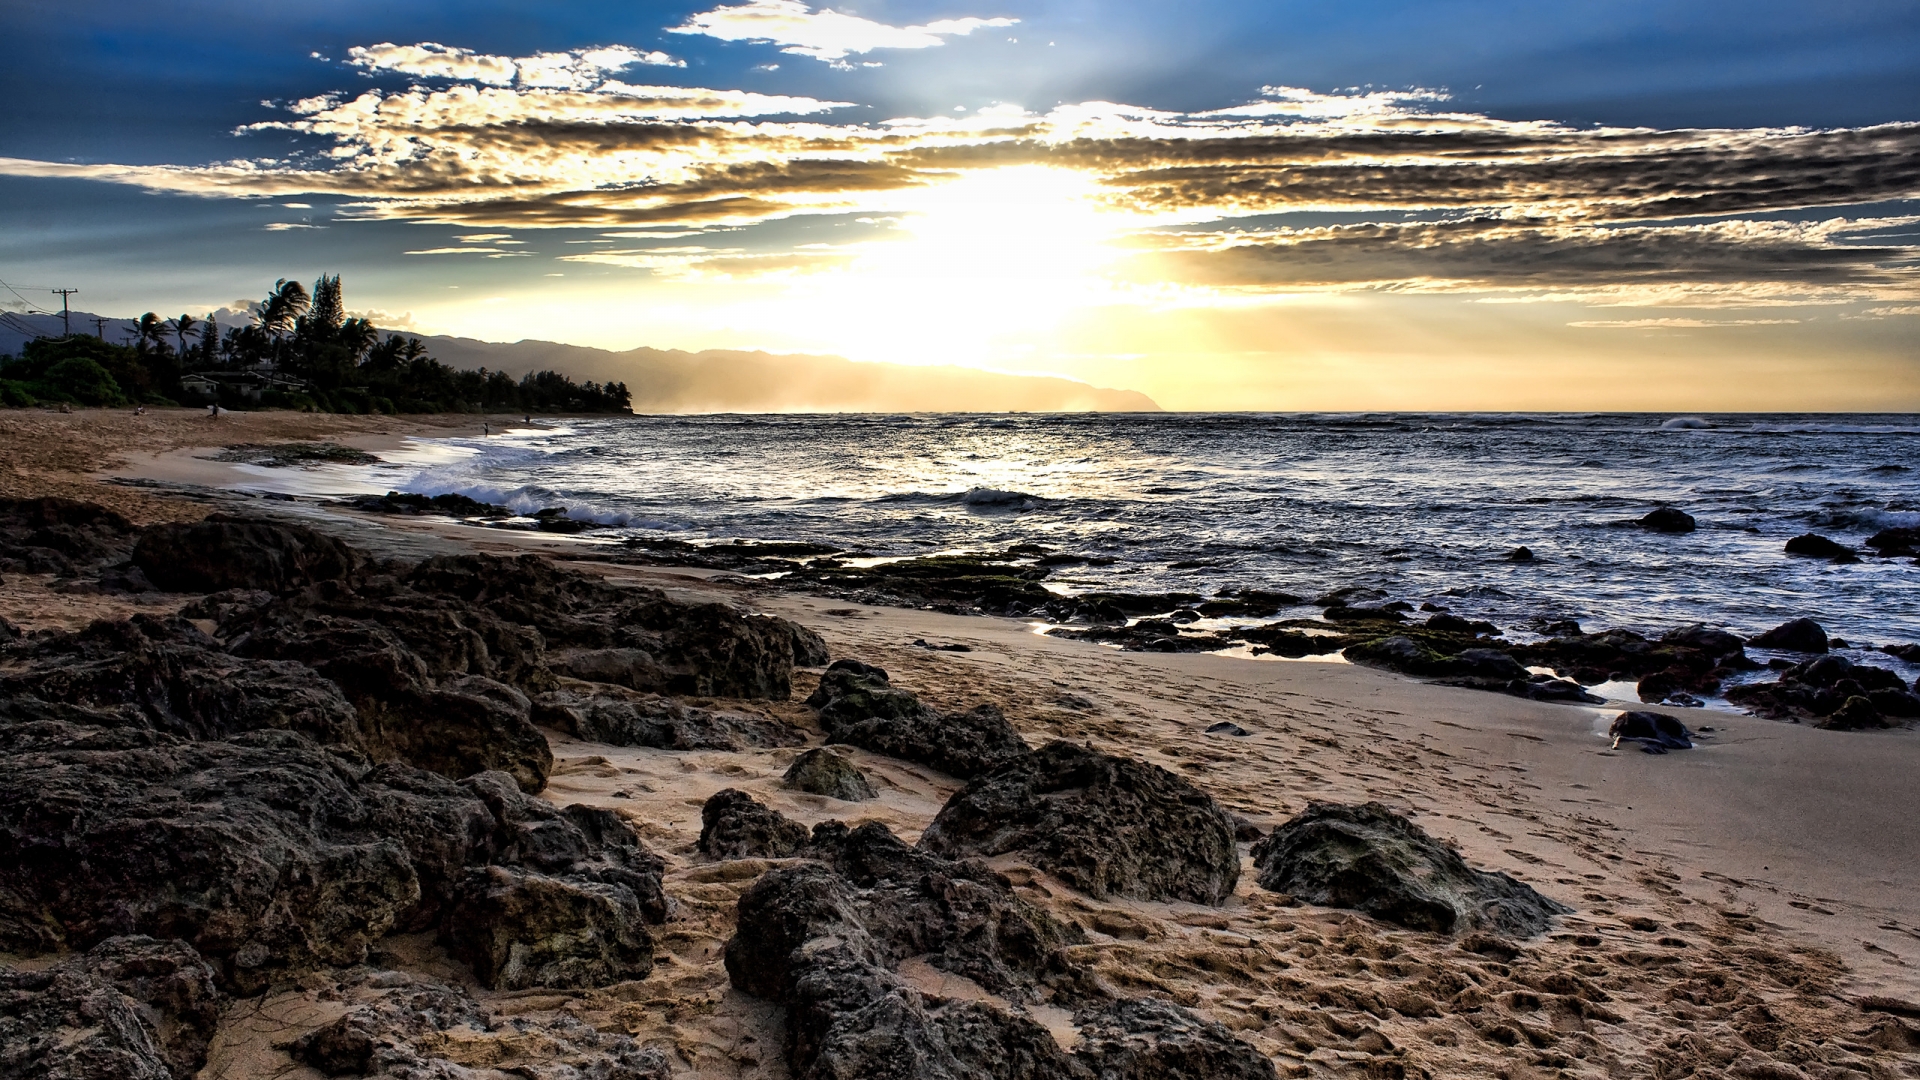 Laniakea Sunset for 1920 x 1080 HDTV 1080p resolution